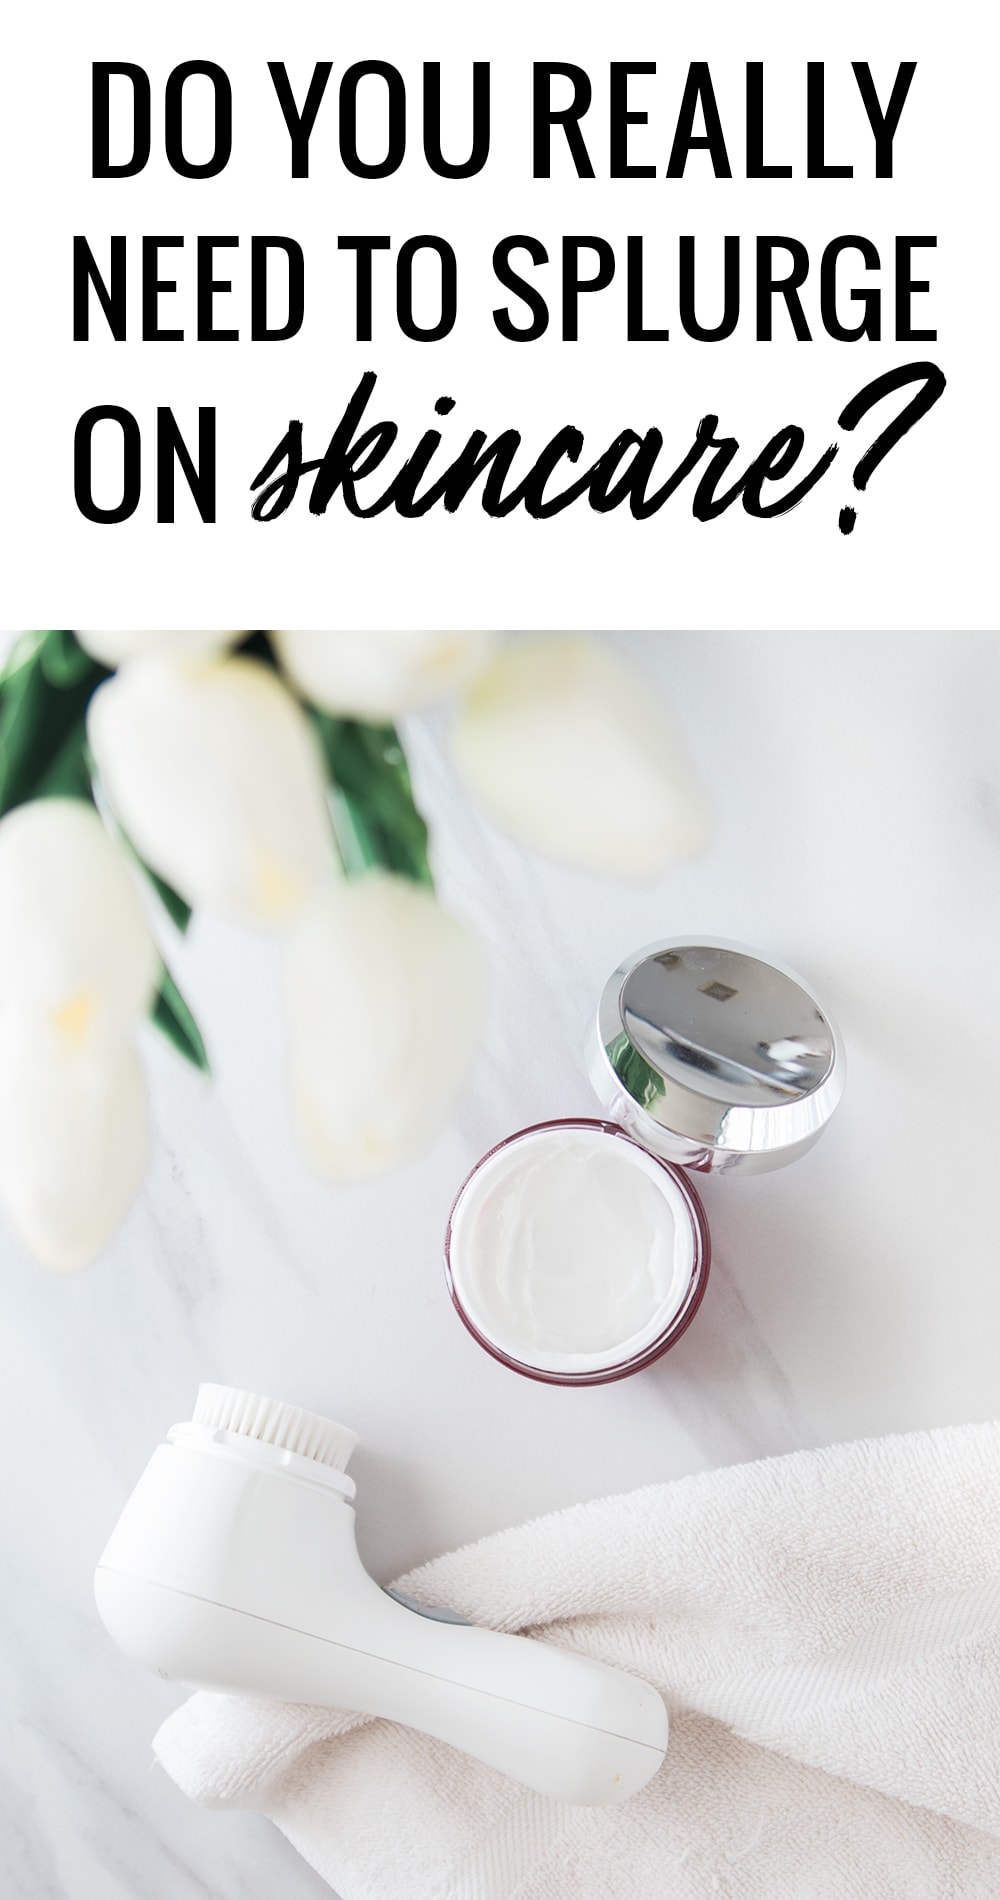 Skincare Tips: Do You Really Need to Splurge on Skincare? by Houston beauty blogger Meg O. on the Go